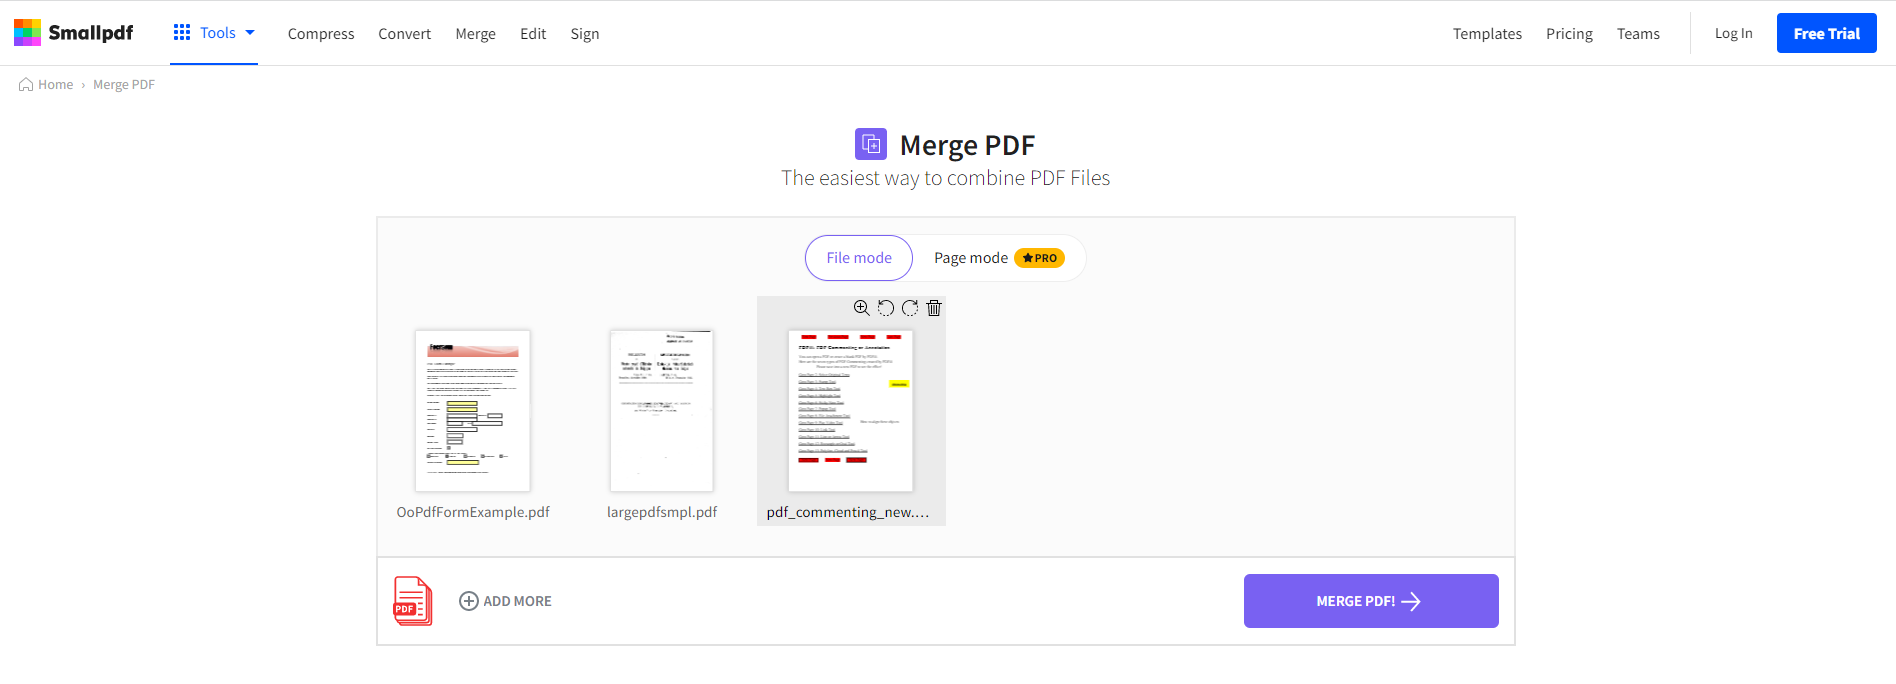 Merge PDFs Online